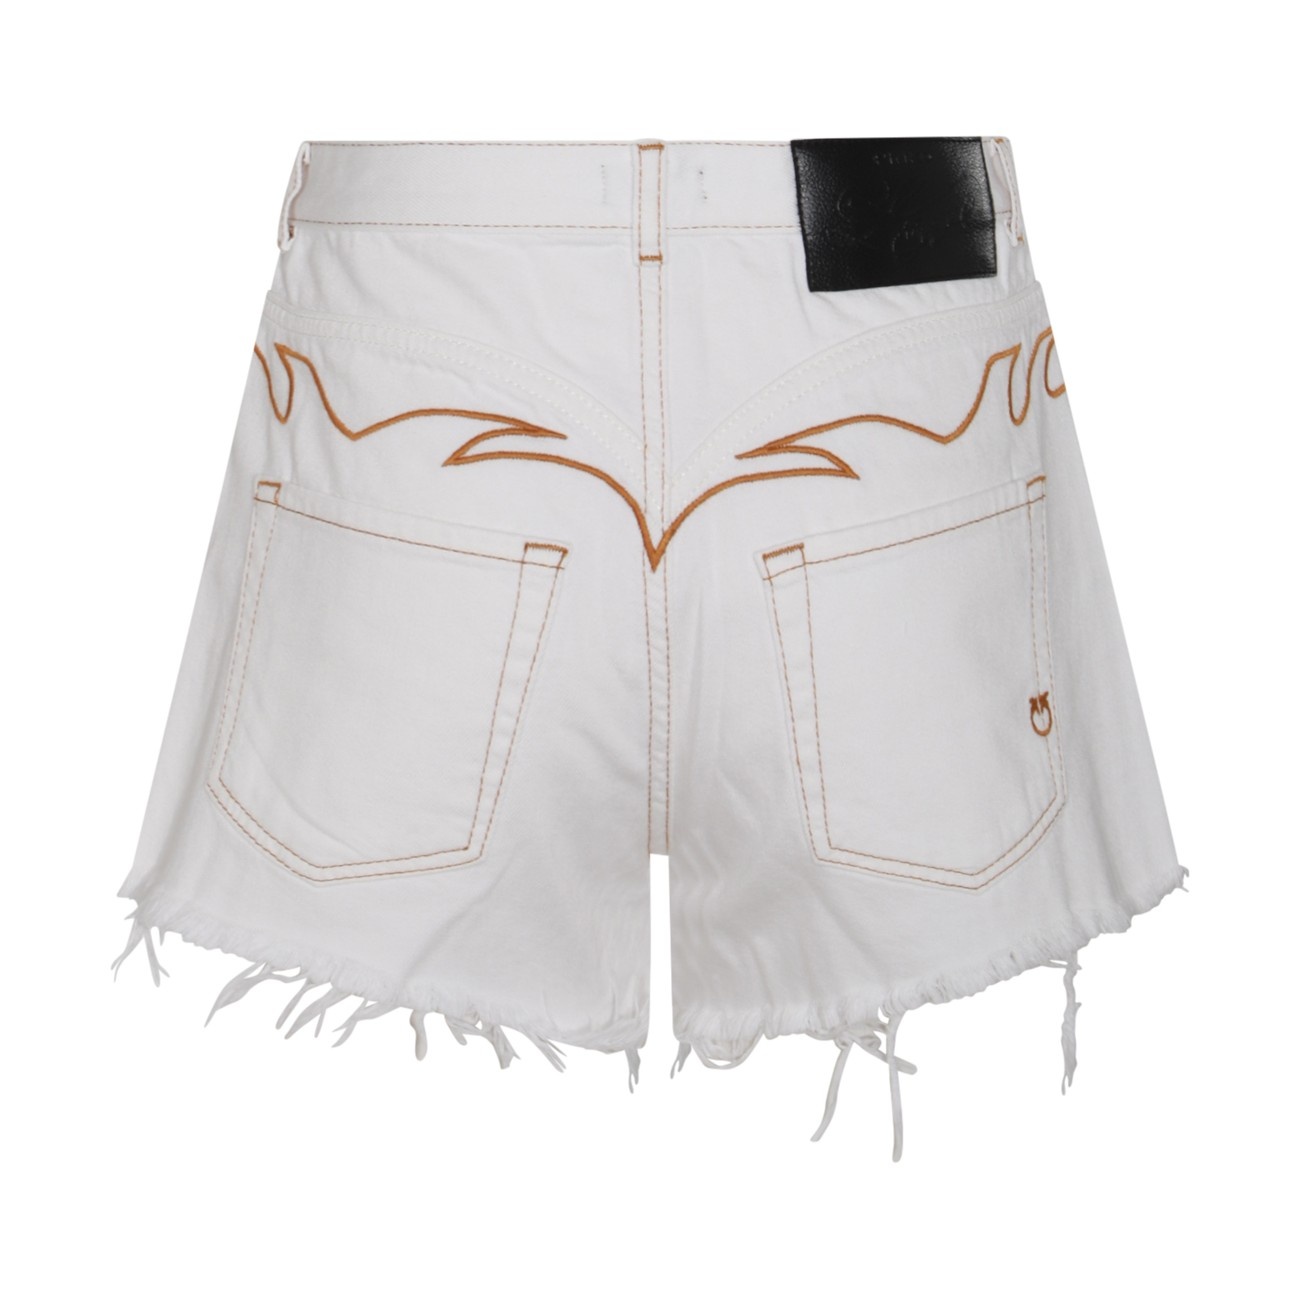 white cotton shorts - 2